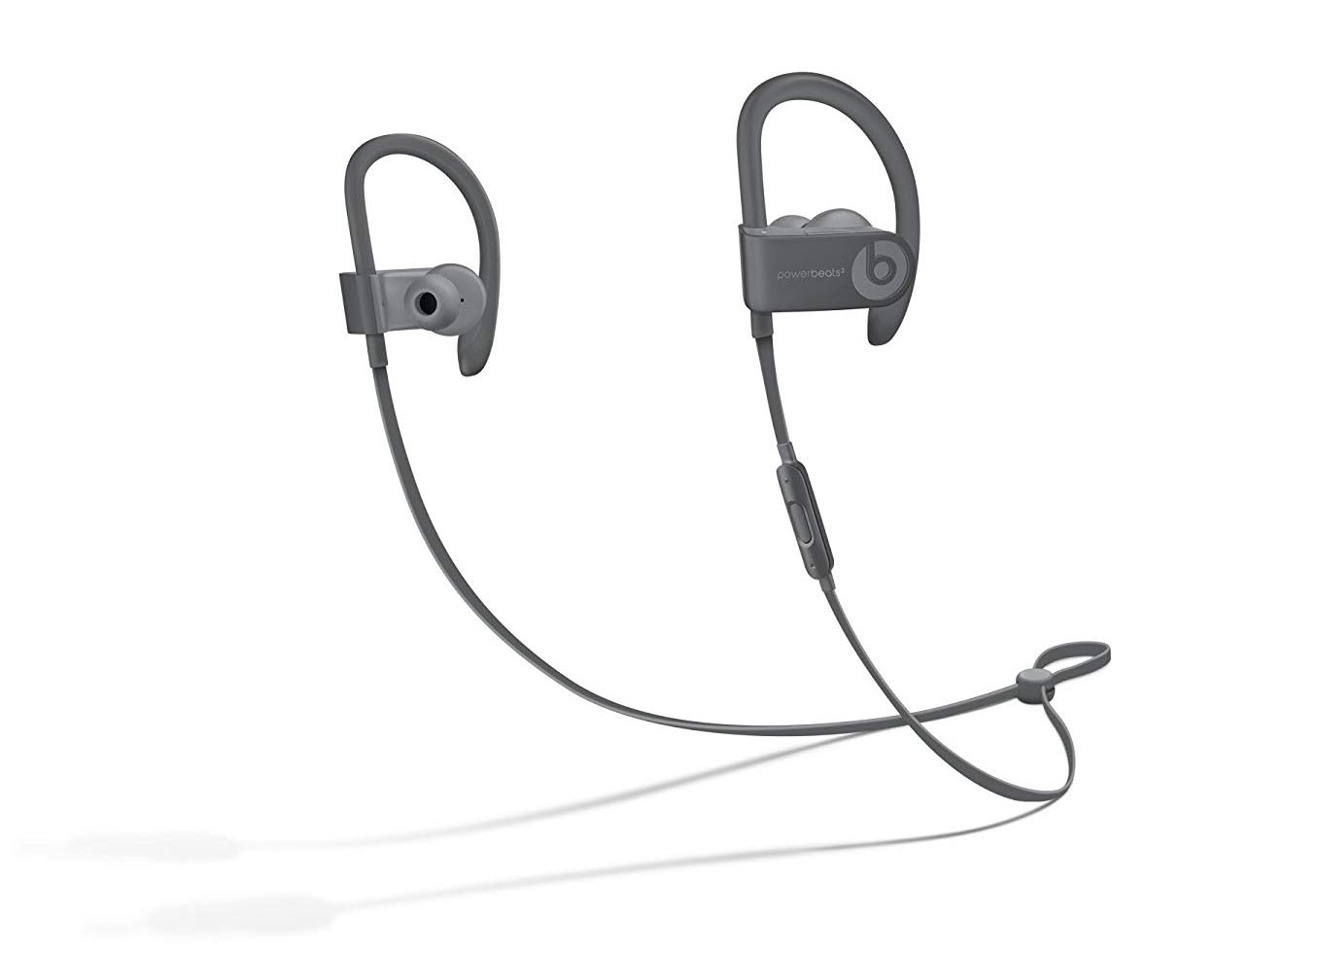 Powerbeats 3 wireless earphones